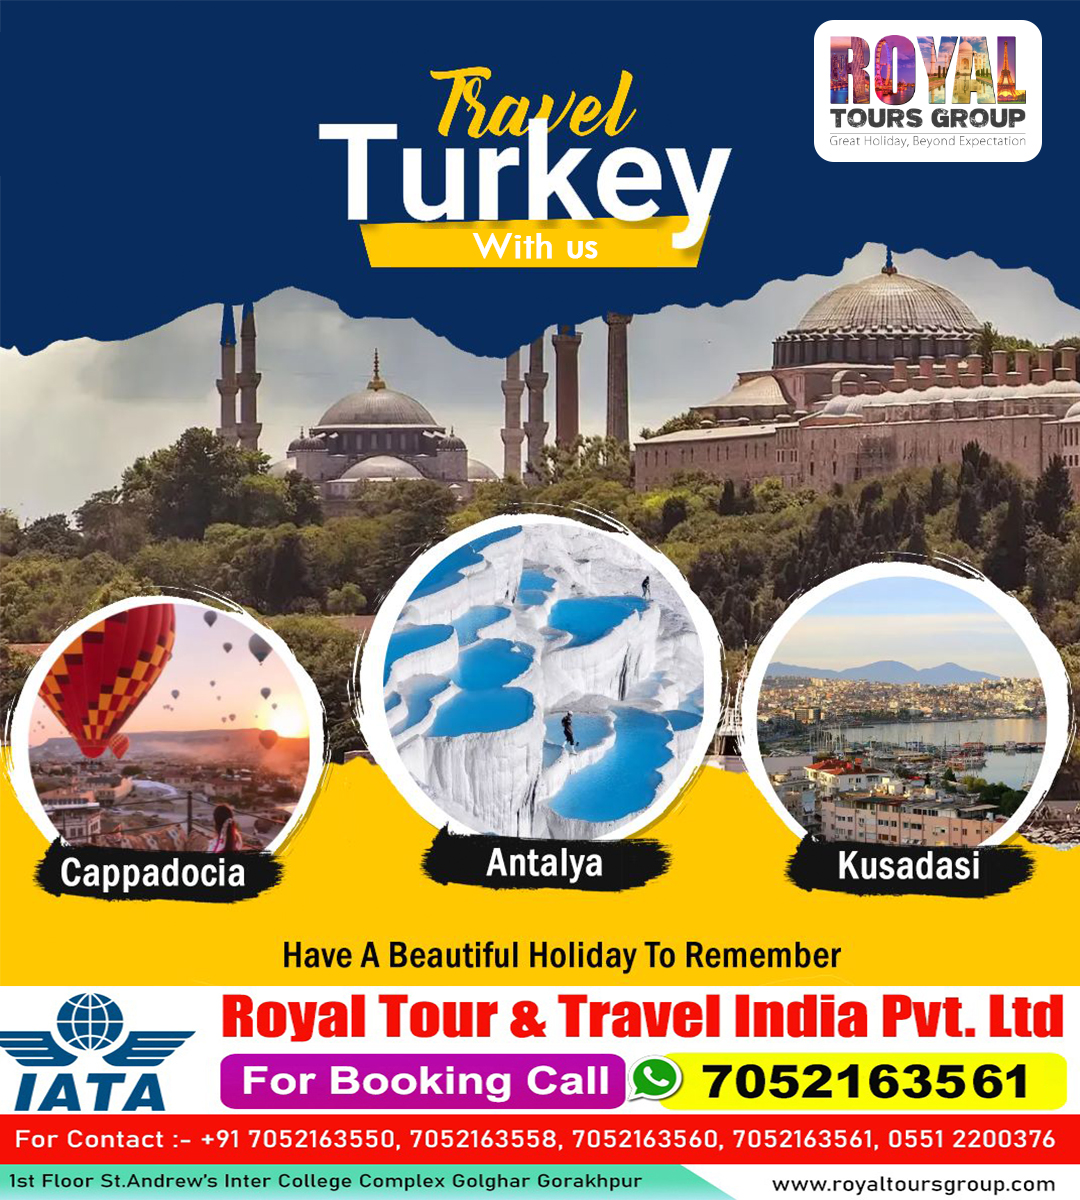 For Booking Call :- 070521 63558
info@royaltoursgroup.com
-----------------------------------------
#travelagent #royalholidaysgorakhpur #Gorakhpur #turkeytravel #travel #everyone #airticket #flight #agency #taxi #holiday #holidaypackages #travel #turkey2023 #turkey